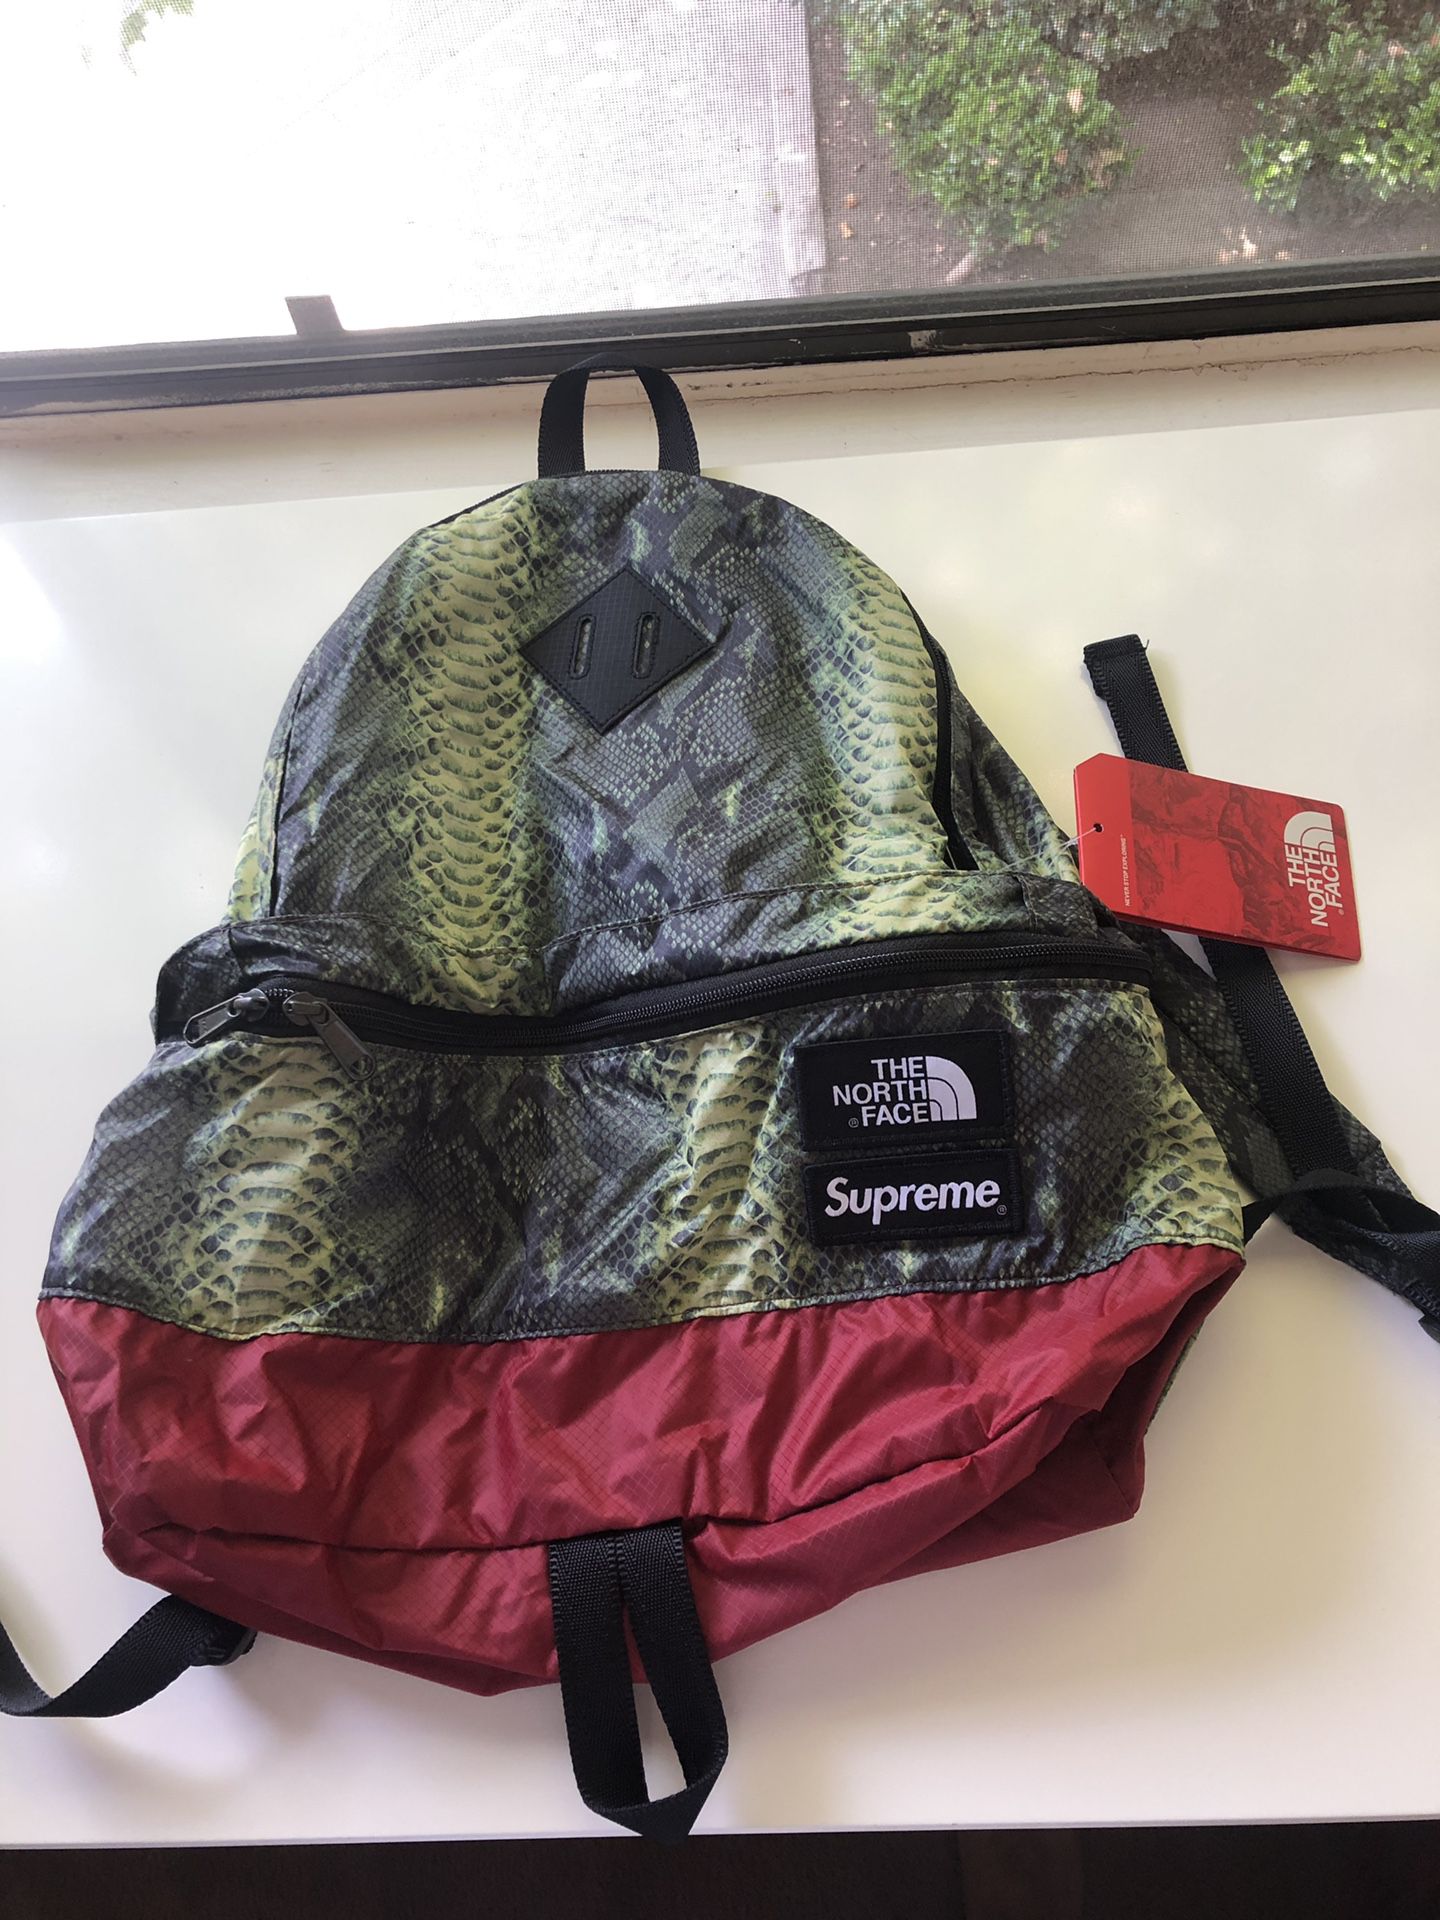 Supreme north face backpack